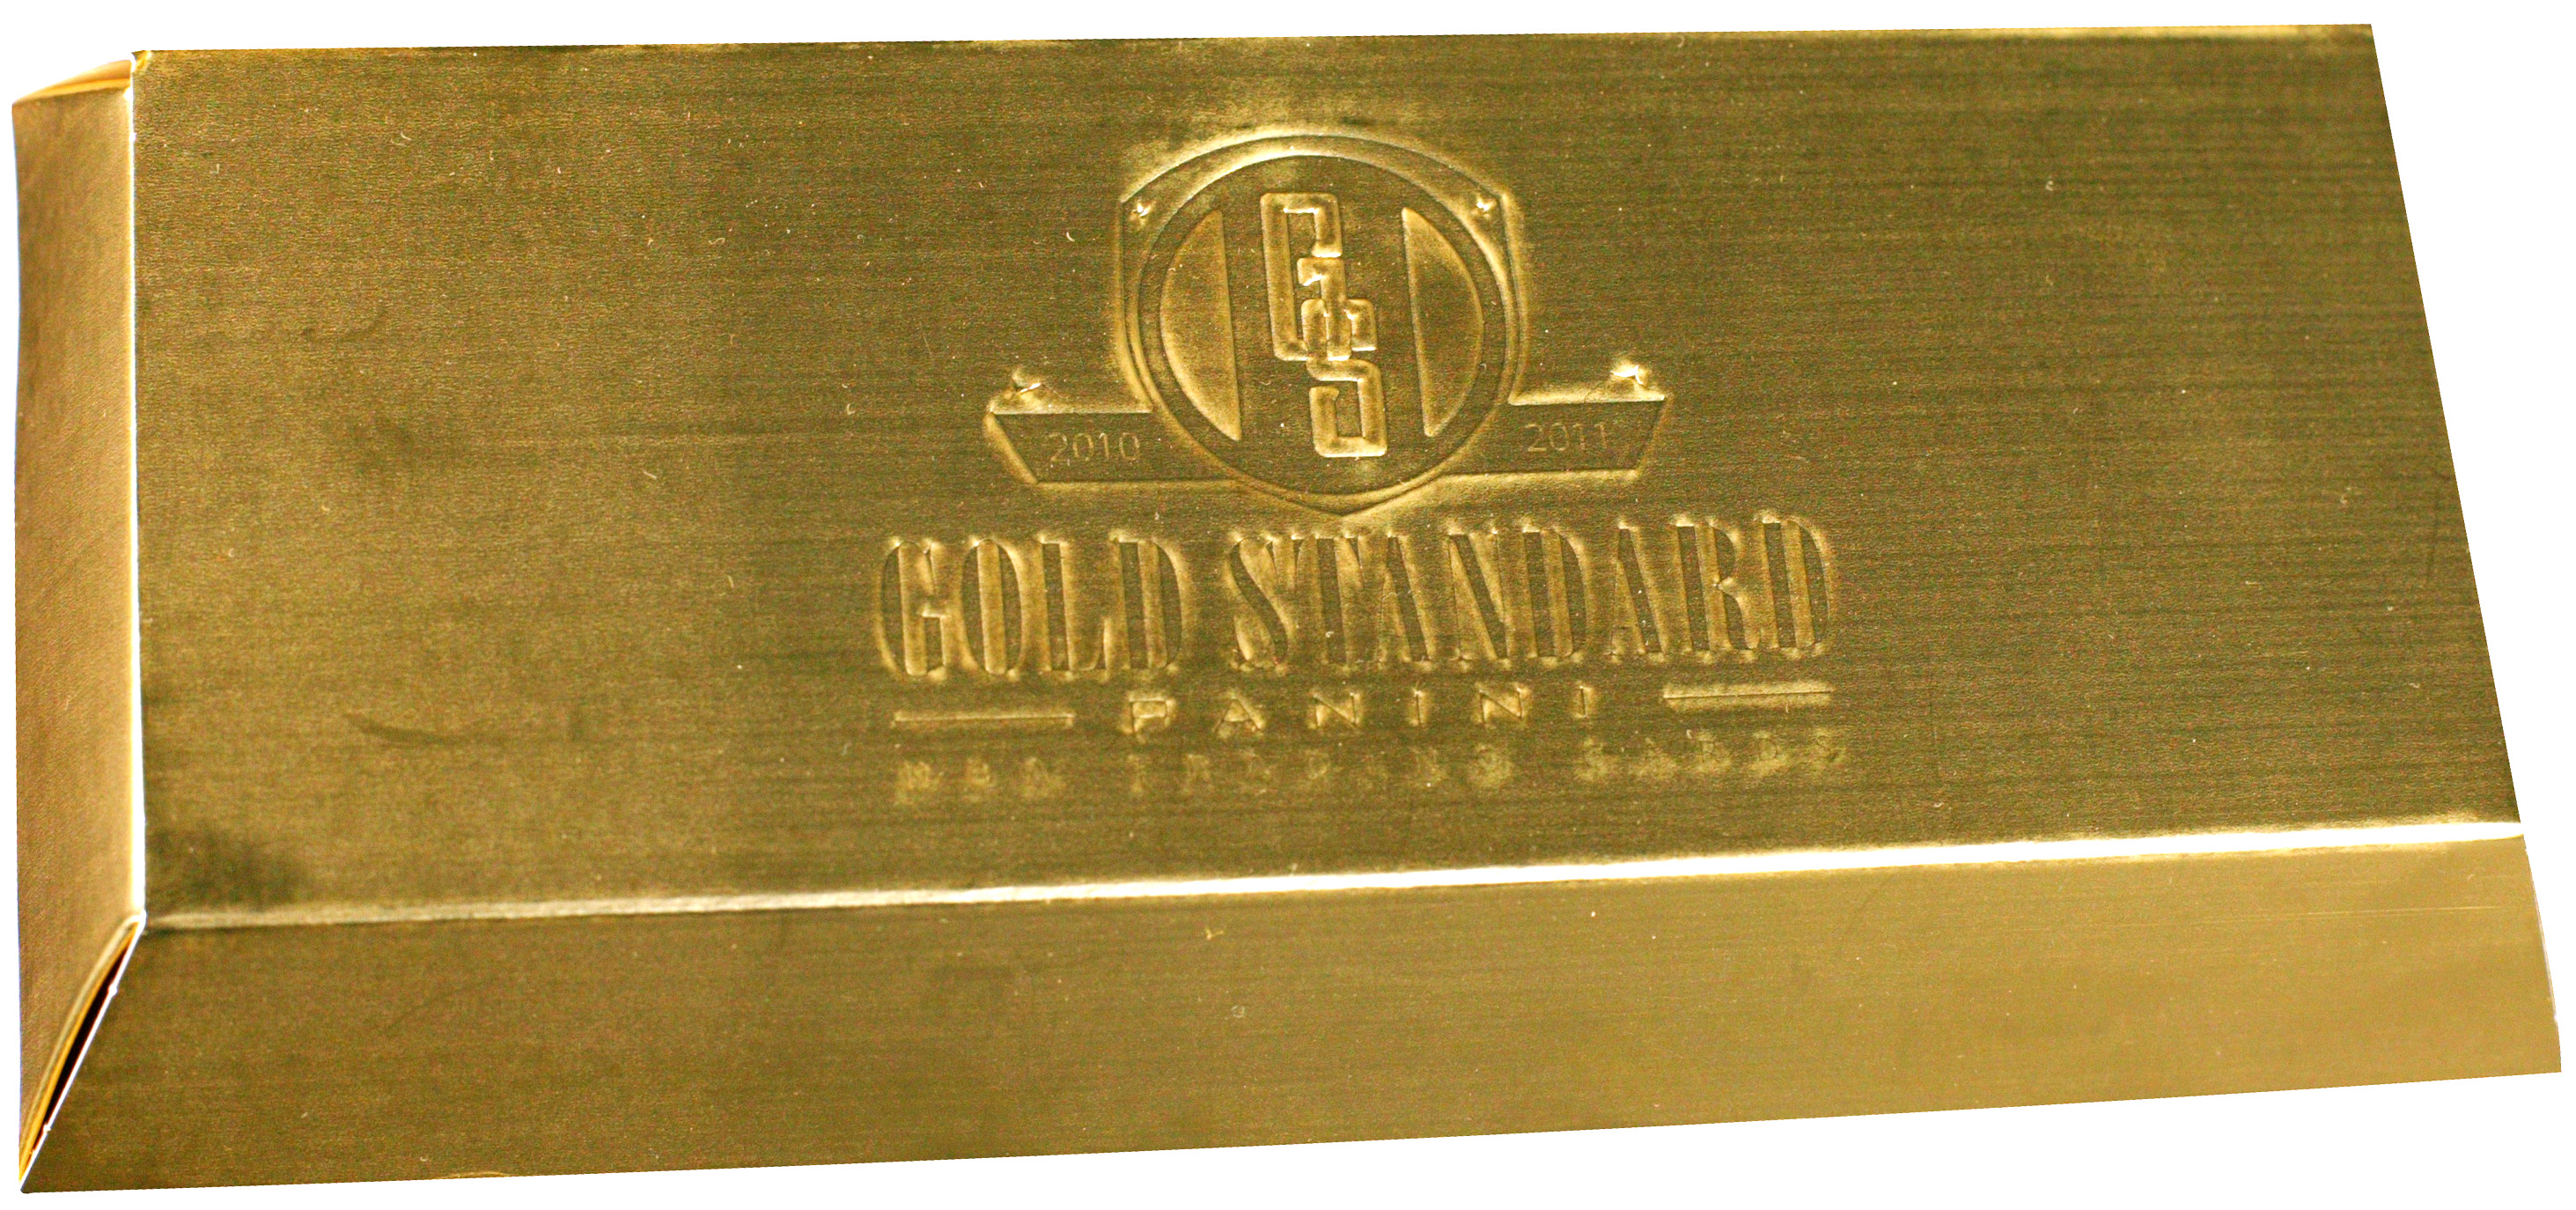 2010-11 Panini Gold Standard Basketball Hobby Box